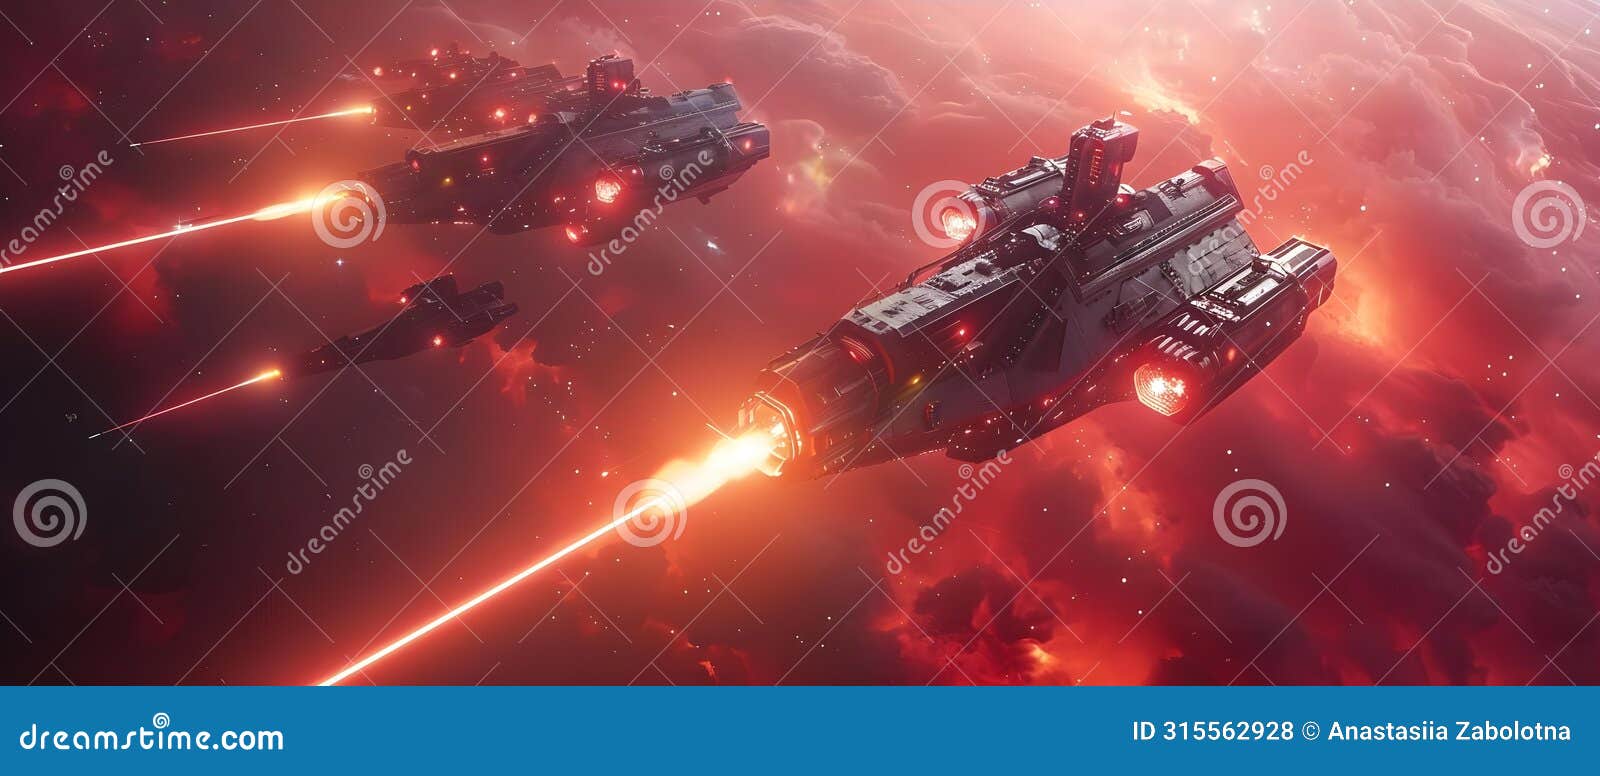 fiery skirmish amongst the stars. concept futuristic warfare, intergalactic battle, sci-fi